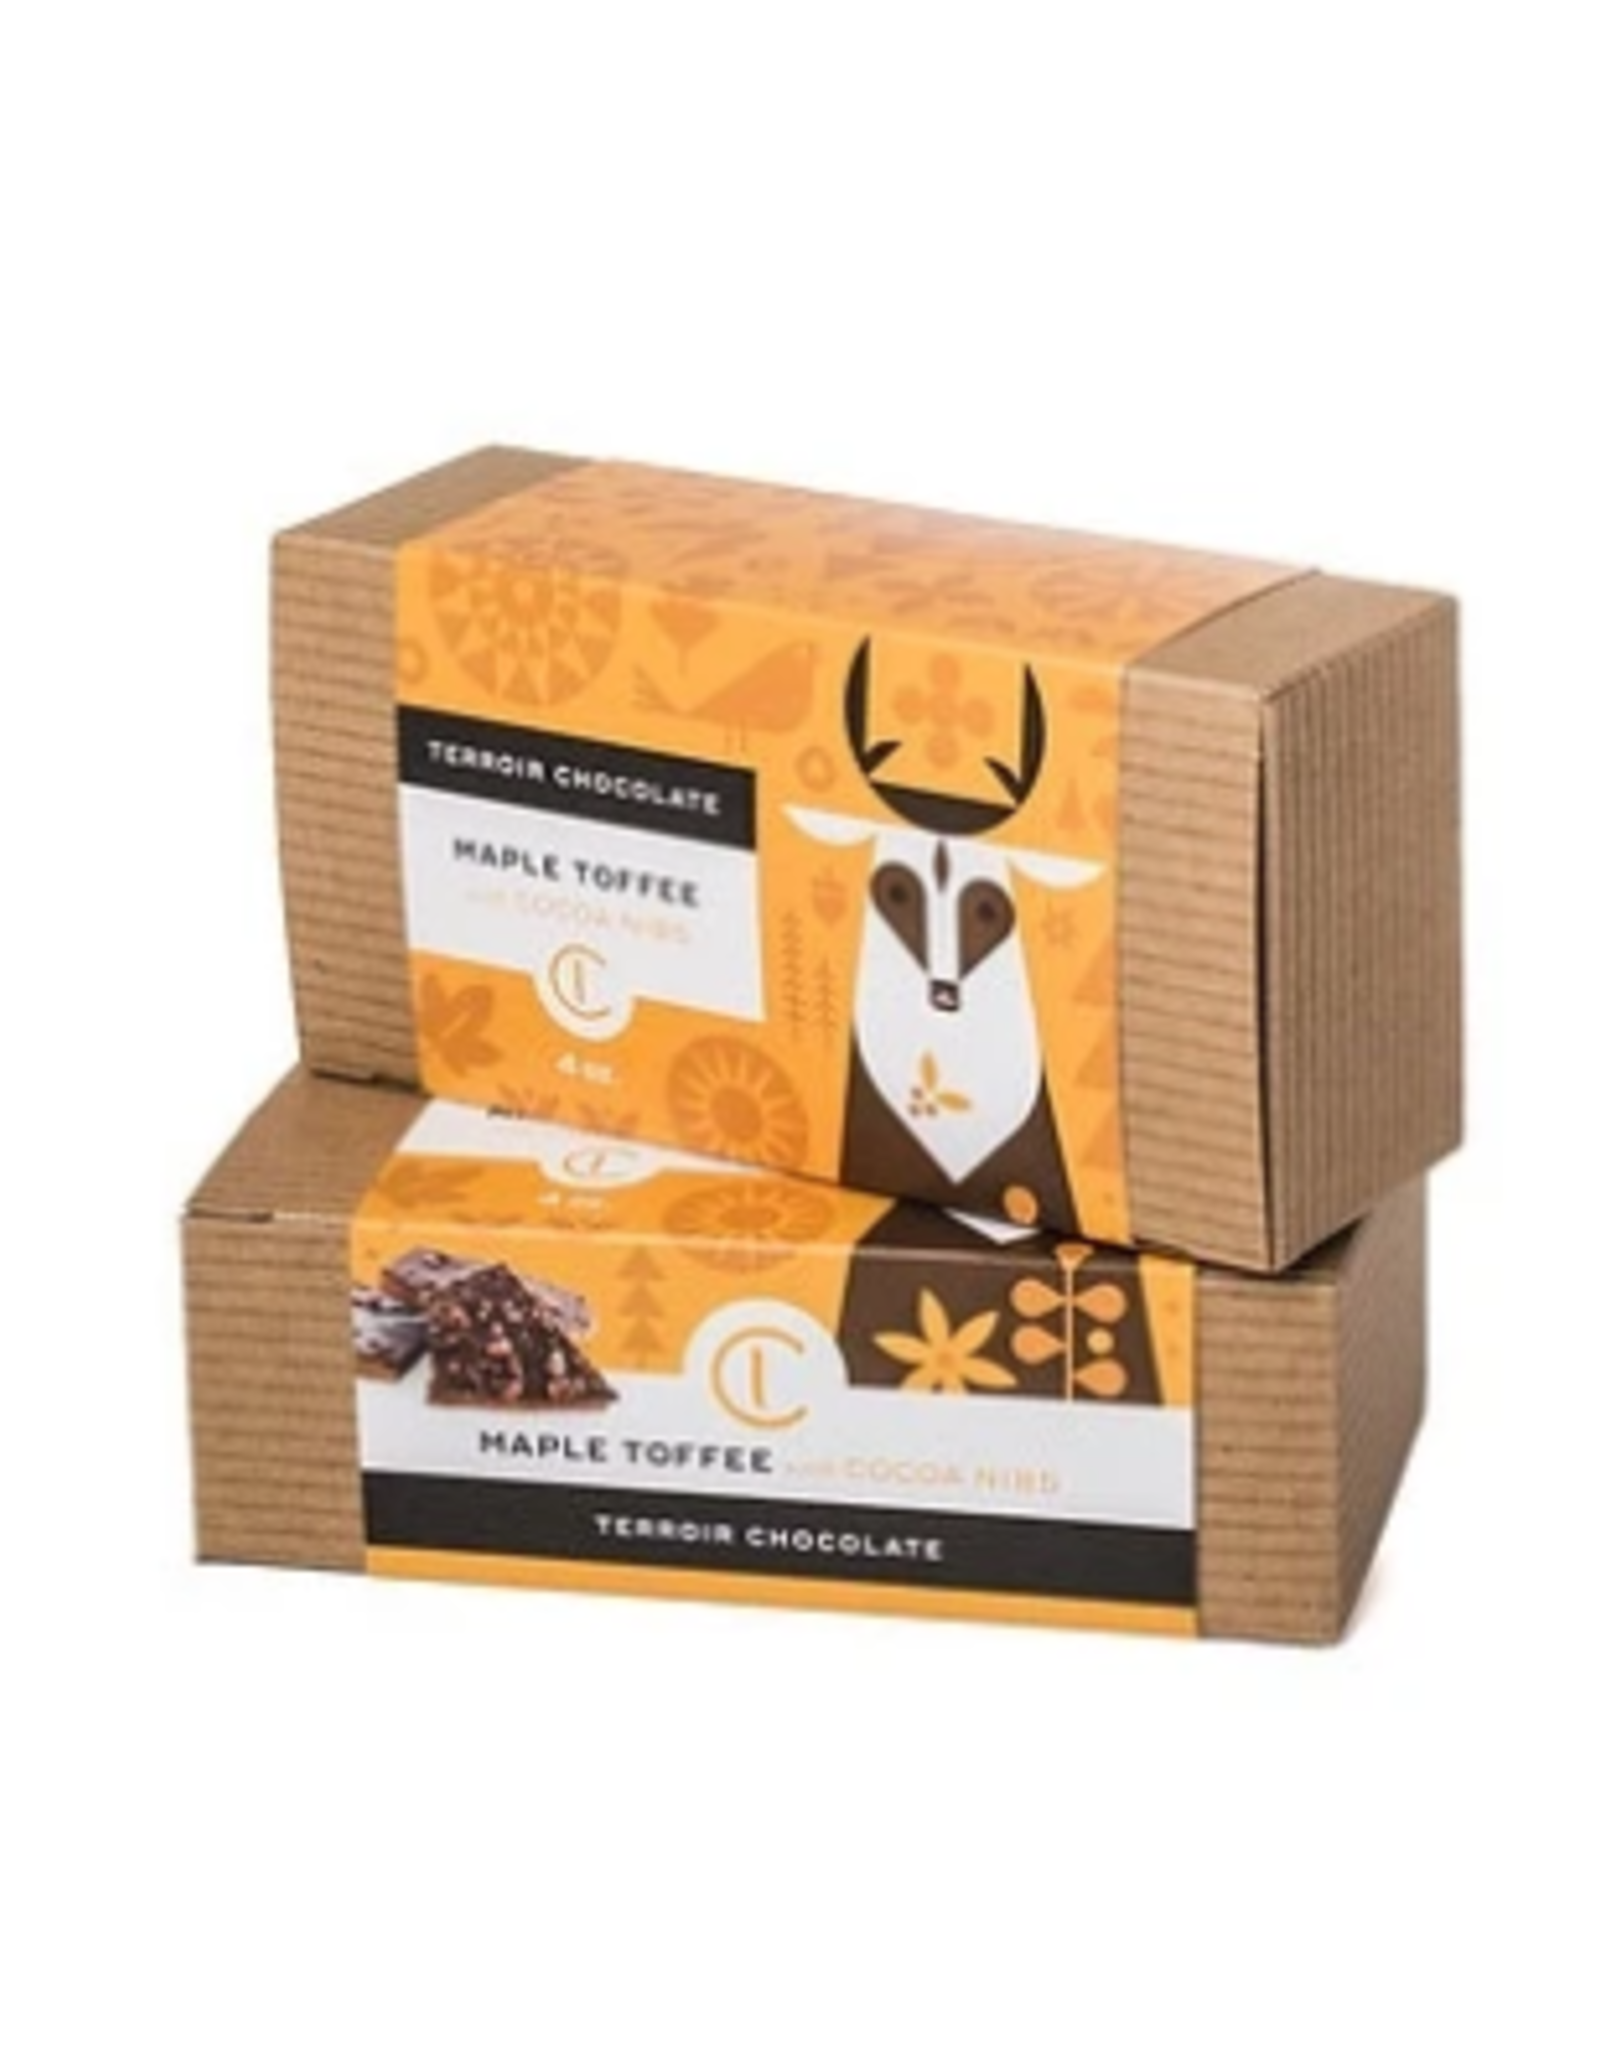 Terroir Chocolate Maple Toffee w/ Cocoa Nibs Box